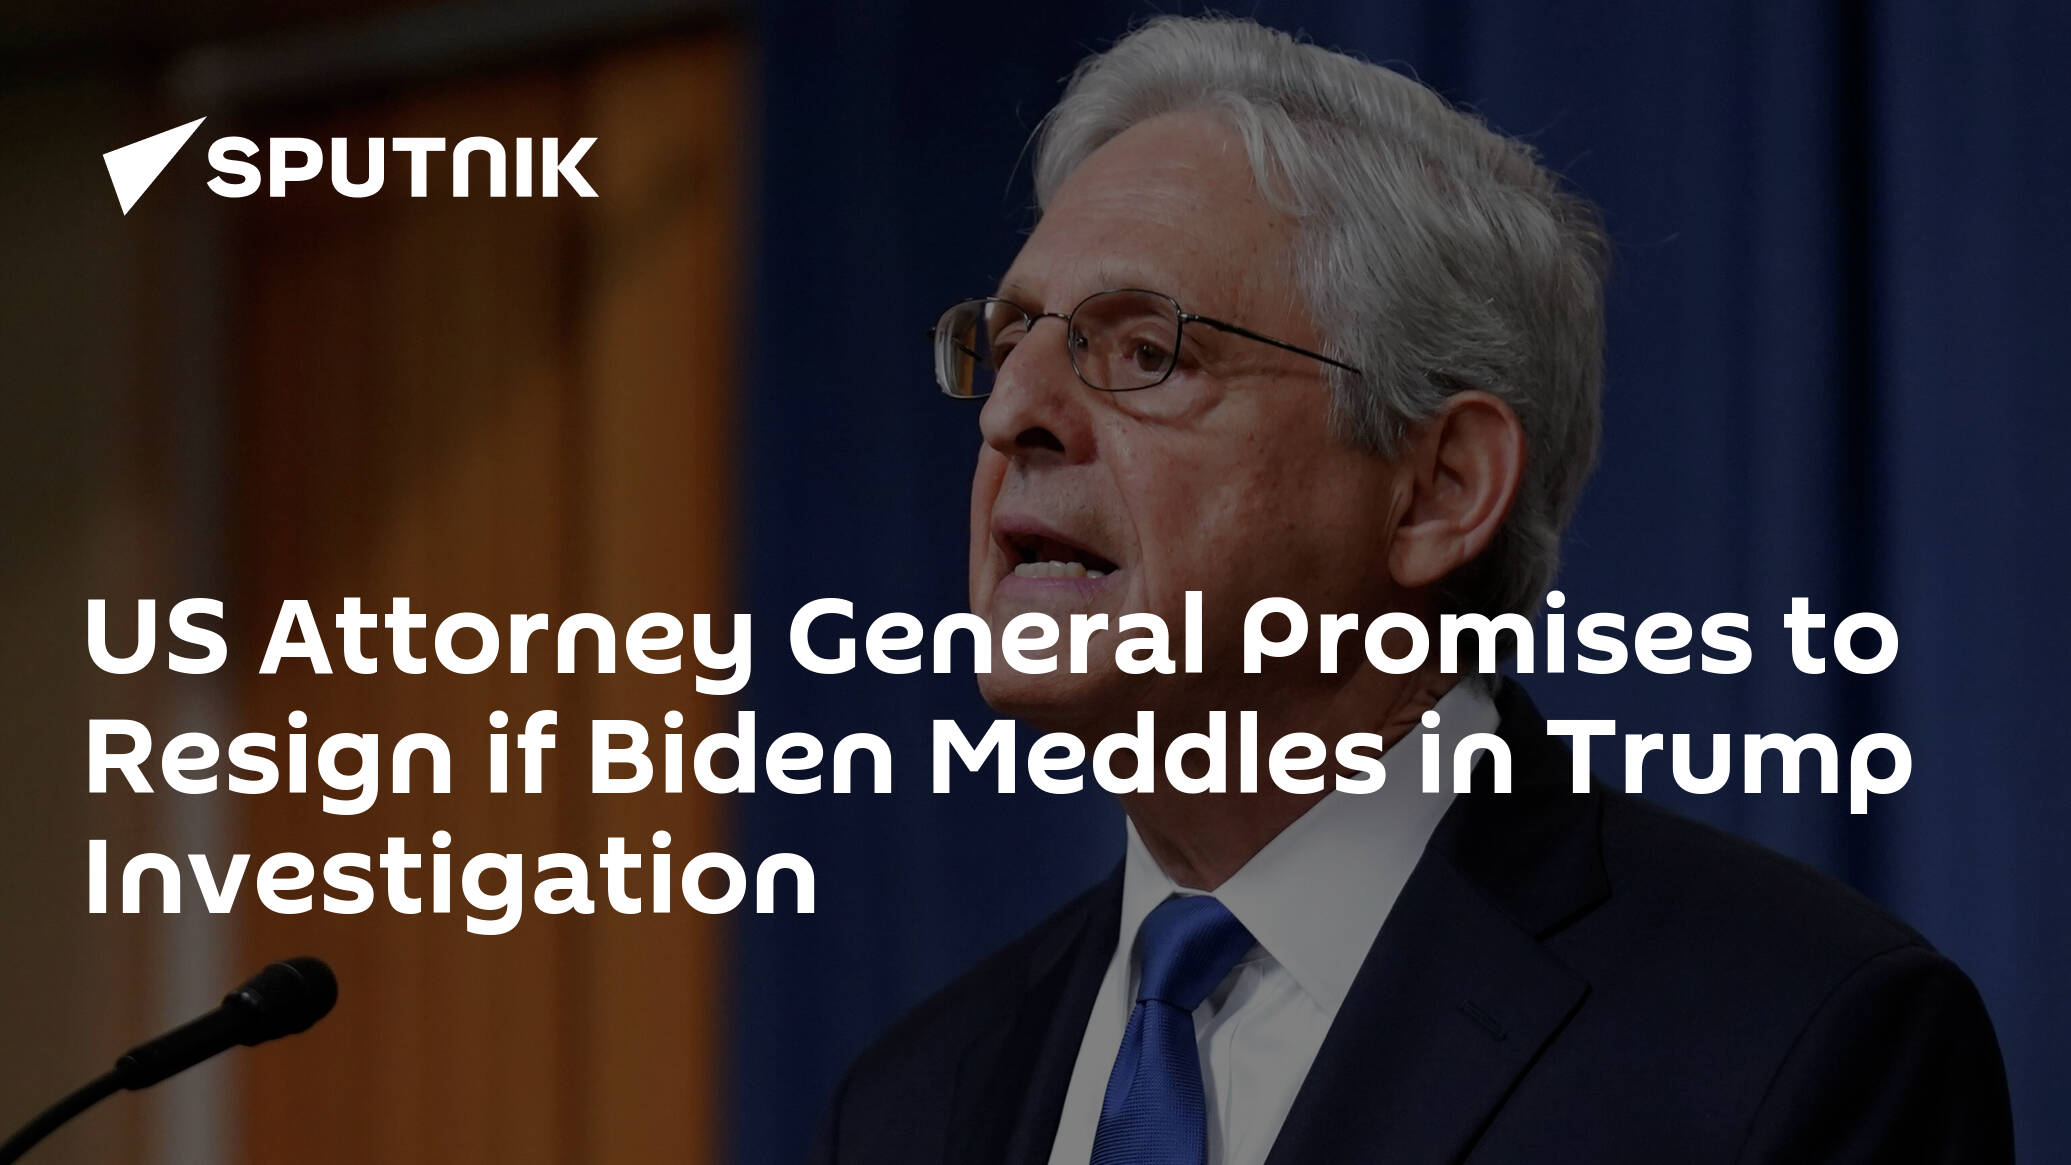 US Attorney General Promises to Resign if Biden Meddles in Trump Investigation